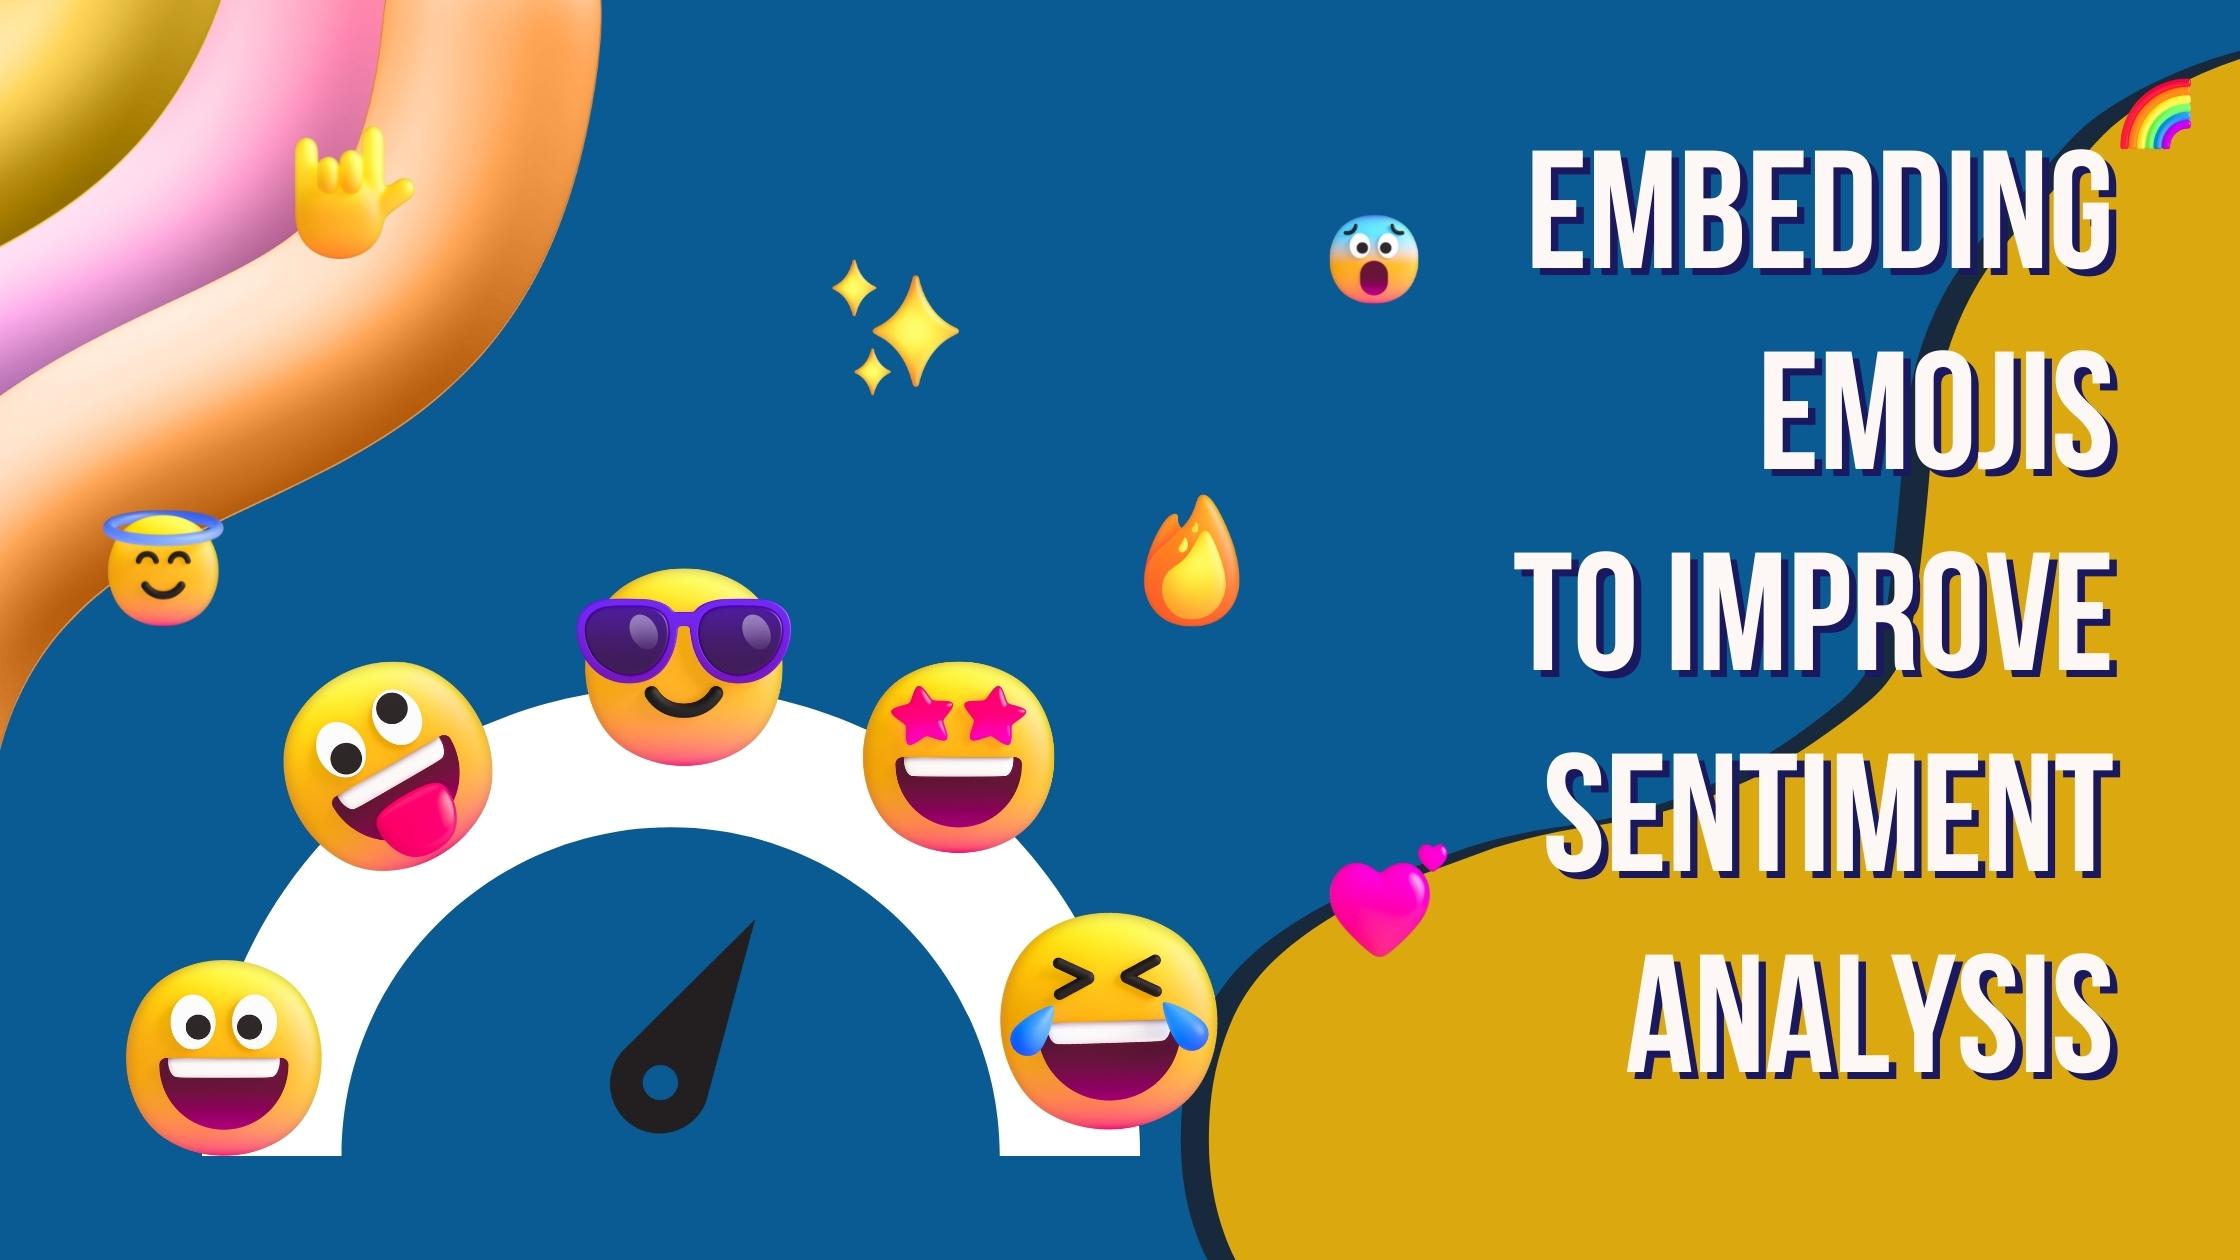 Embedding Emojis To Improve Sentiment Analysis